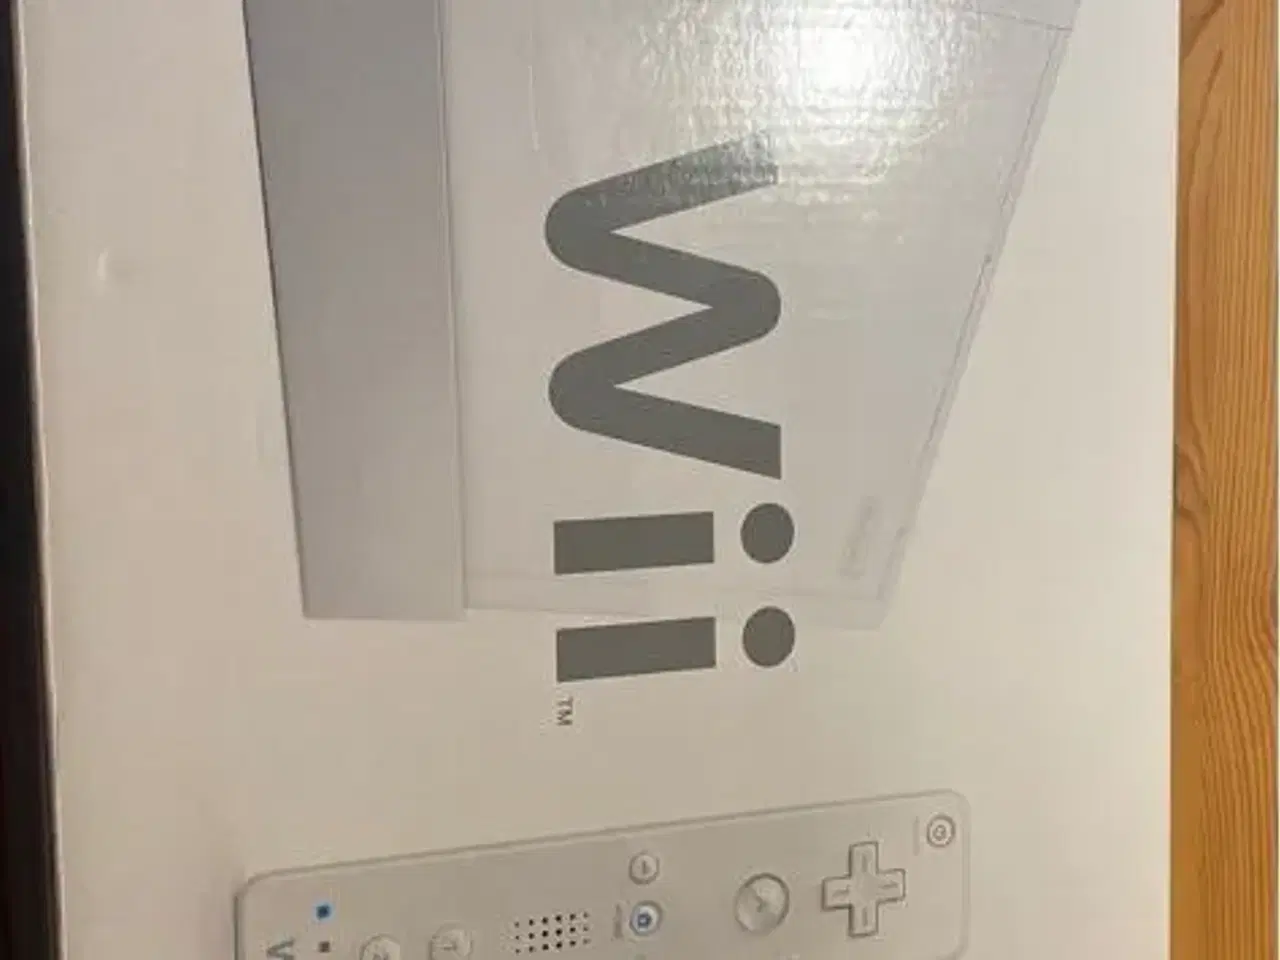 Billede 1 - Nintendo Wii i original emballage